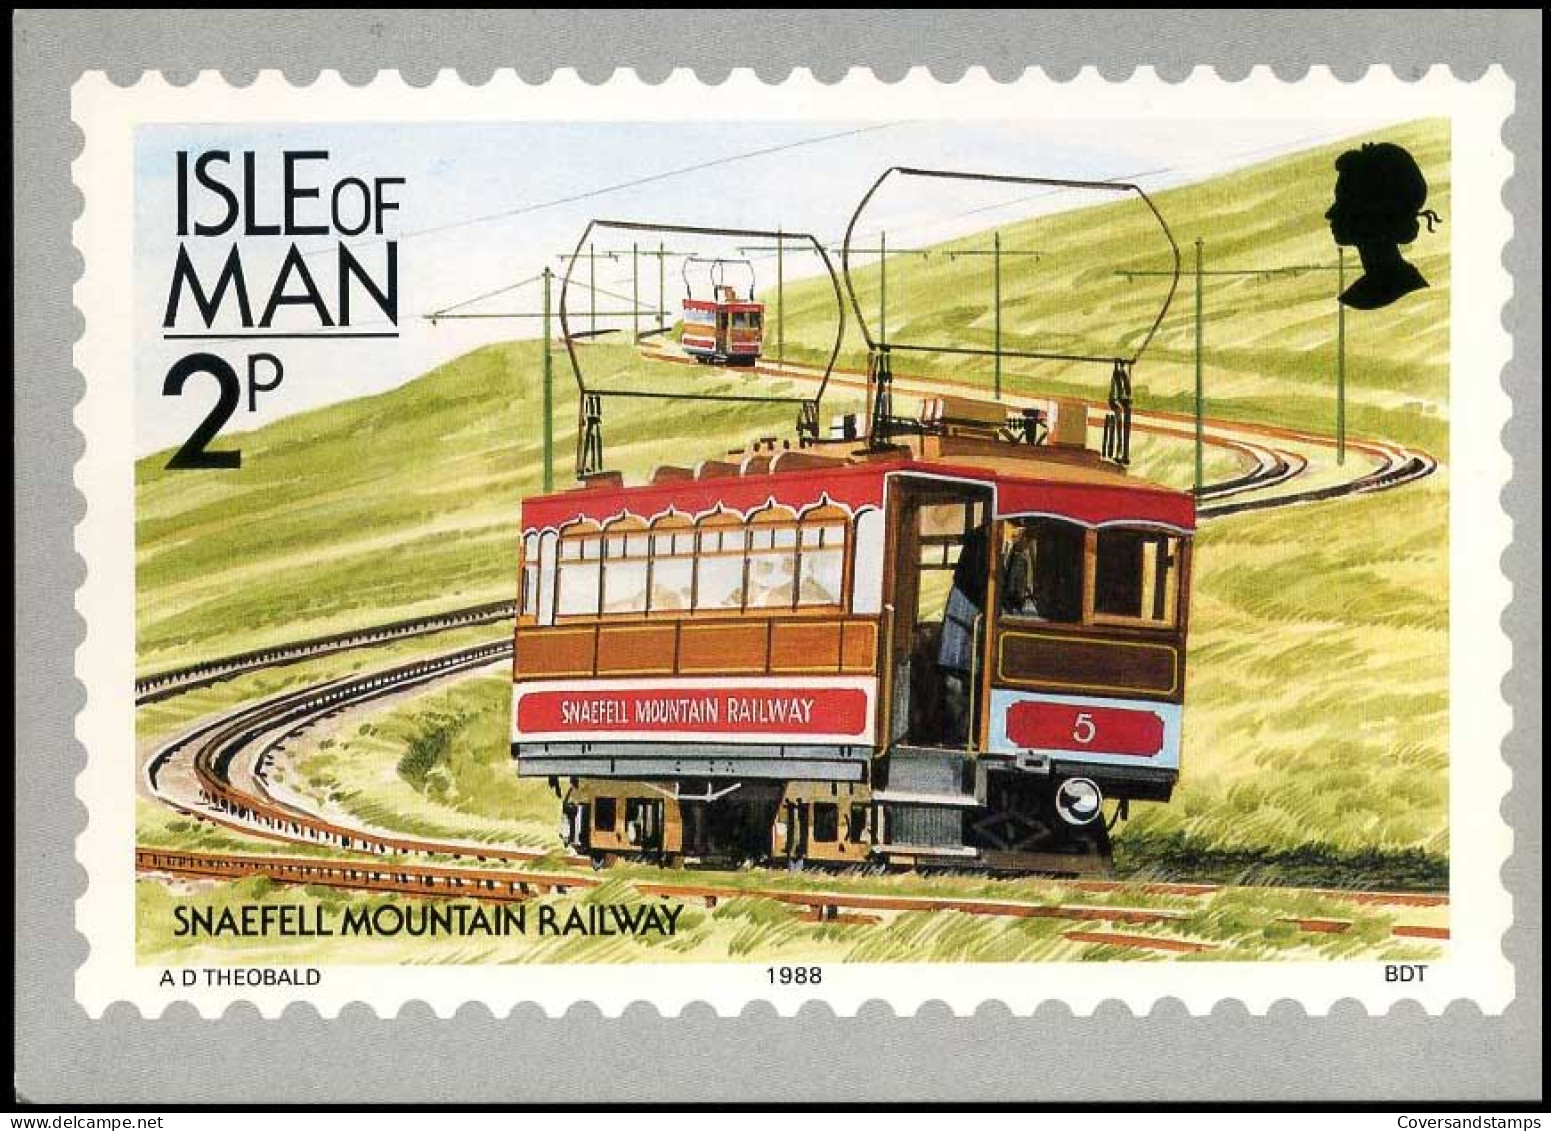 Isle Of Man - MK - Railways And Tramways Of The Isle Of Man                         - Isla De Man